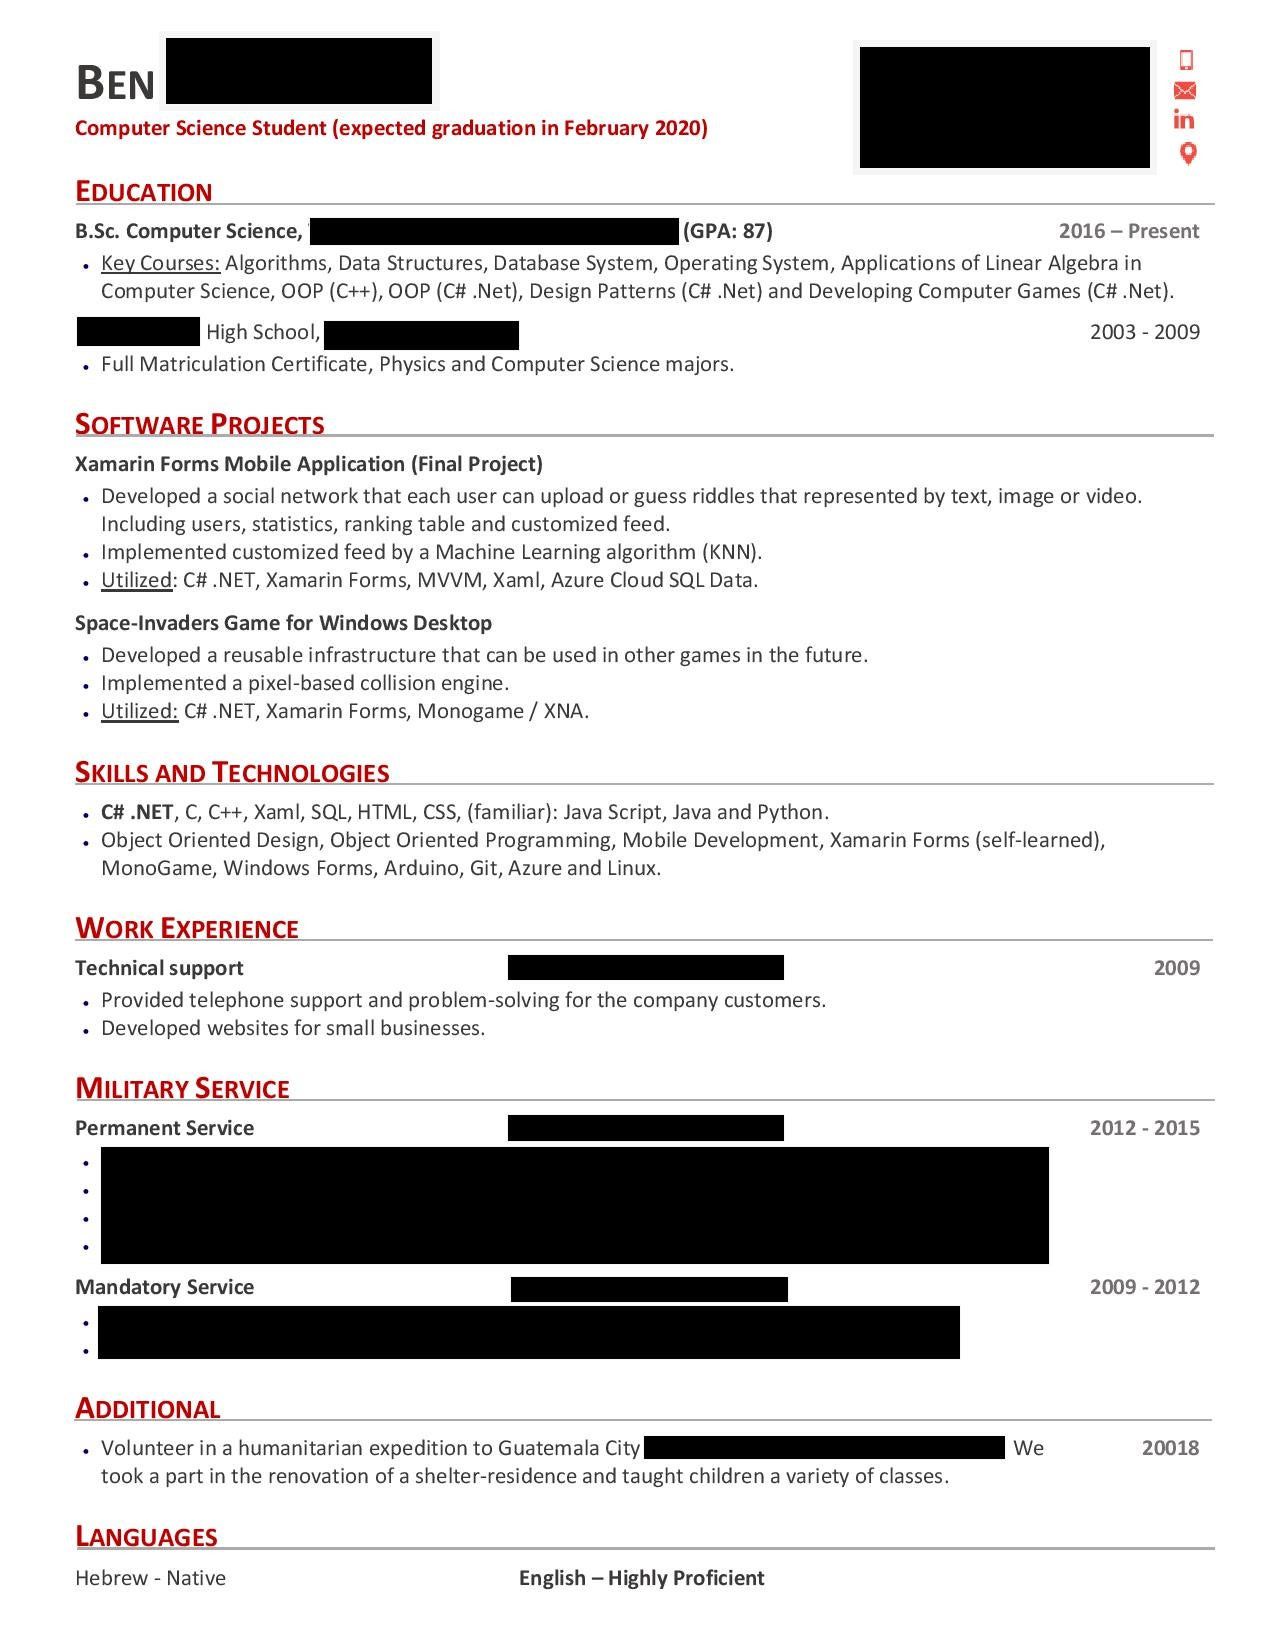 Sample Resume Of Fresh Graduate Computer Science Fresh Computer Science Graduate Resume. : R/resumes